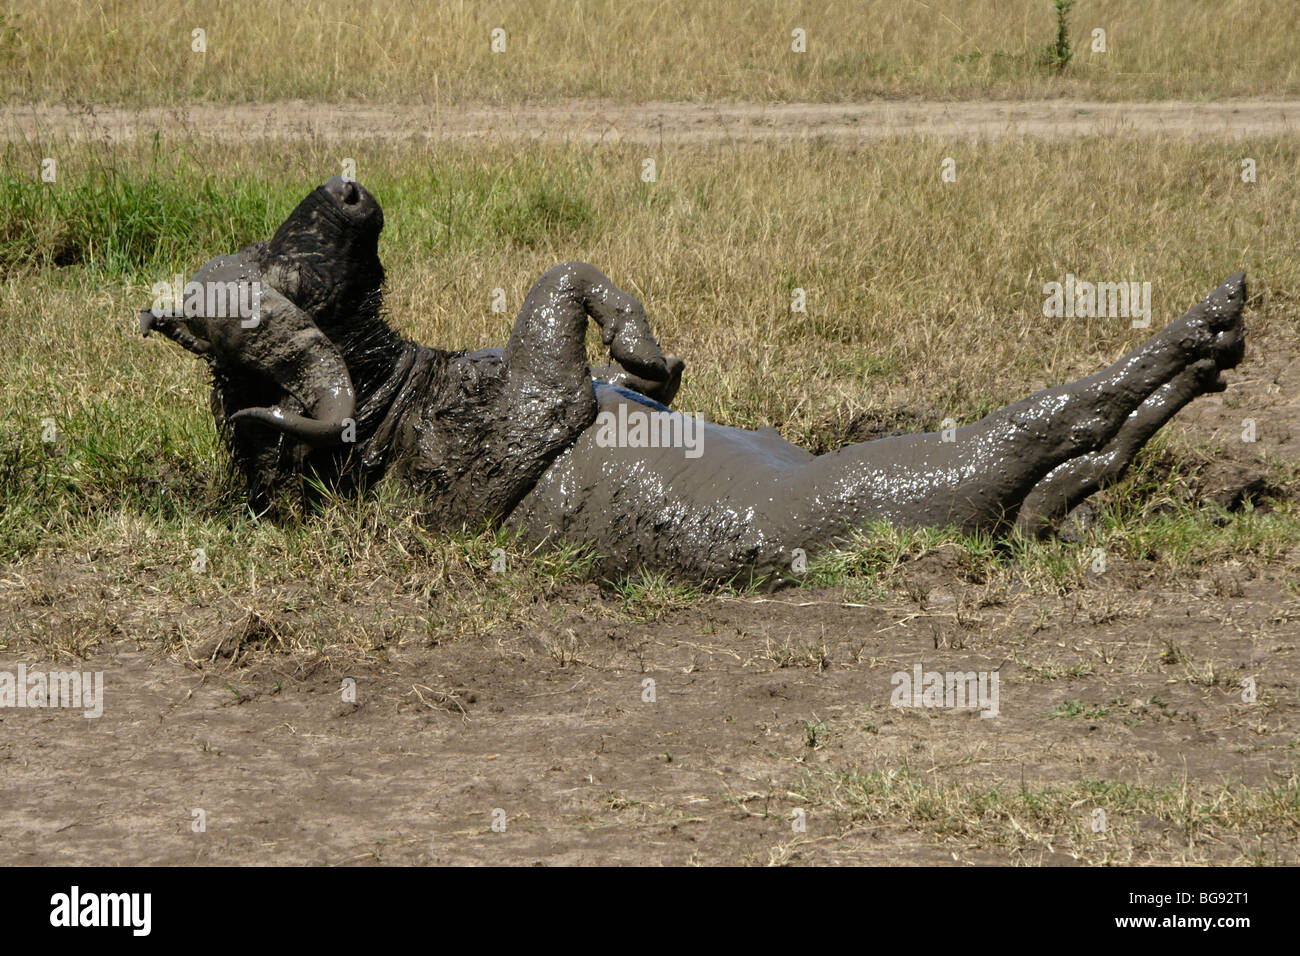 Cape buffalo wallowing in mud, Masai Mara, Kenya Stock Photo